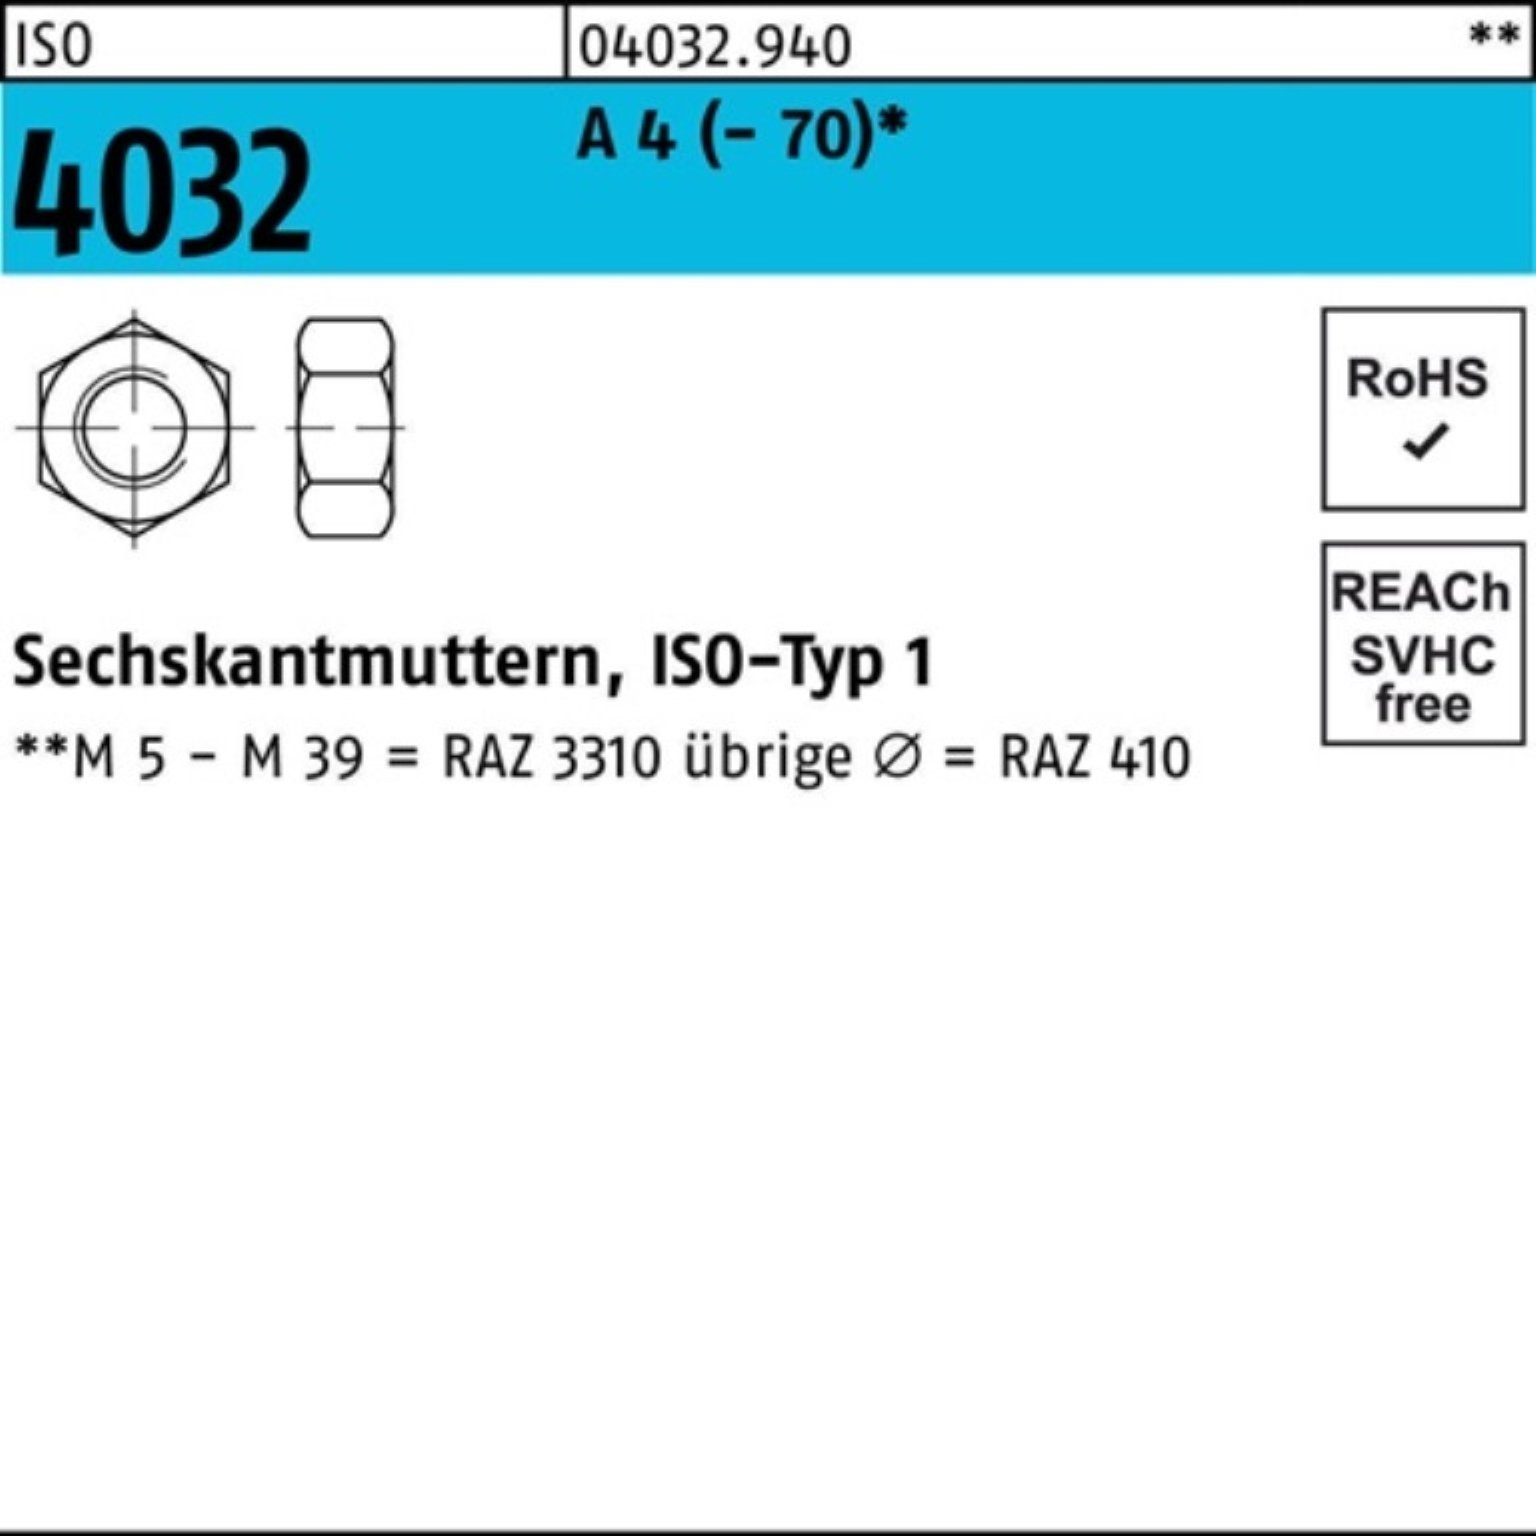 ISO Stück M5 (70) Muttern 1000er 403 1000 4 ISO Sechskantmutter Bufab Pack 4032 A